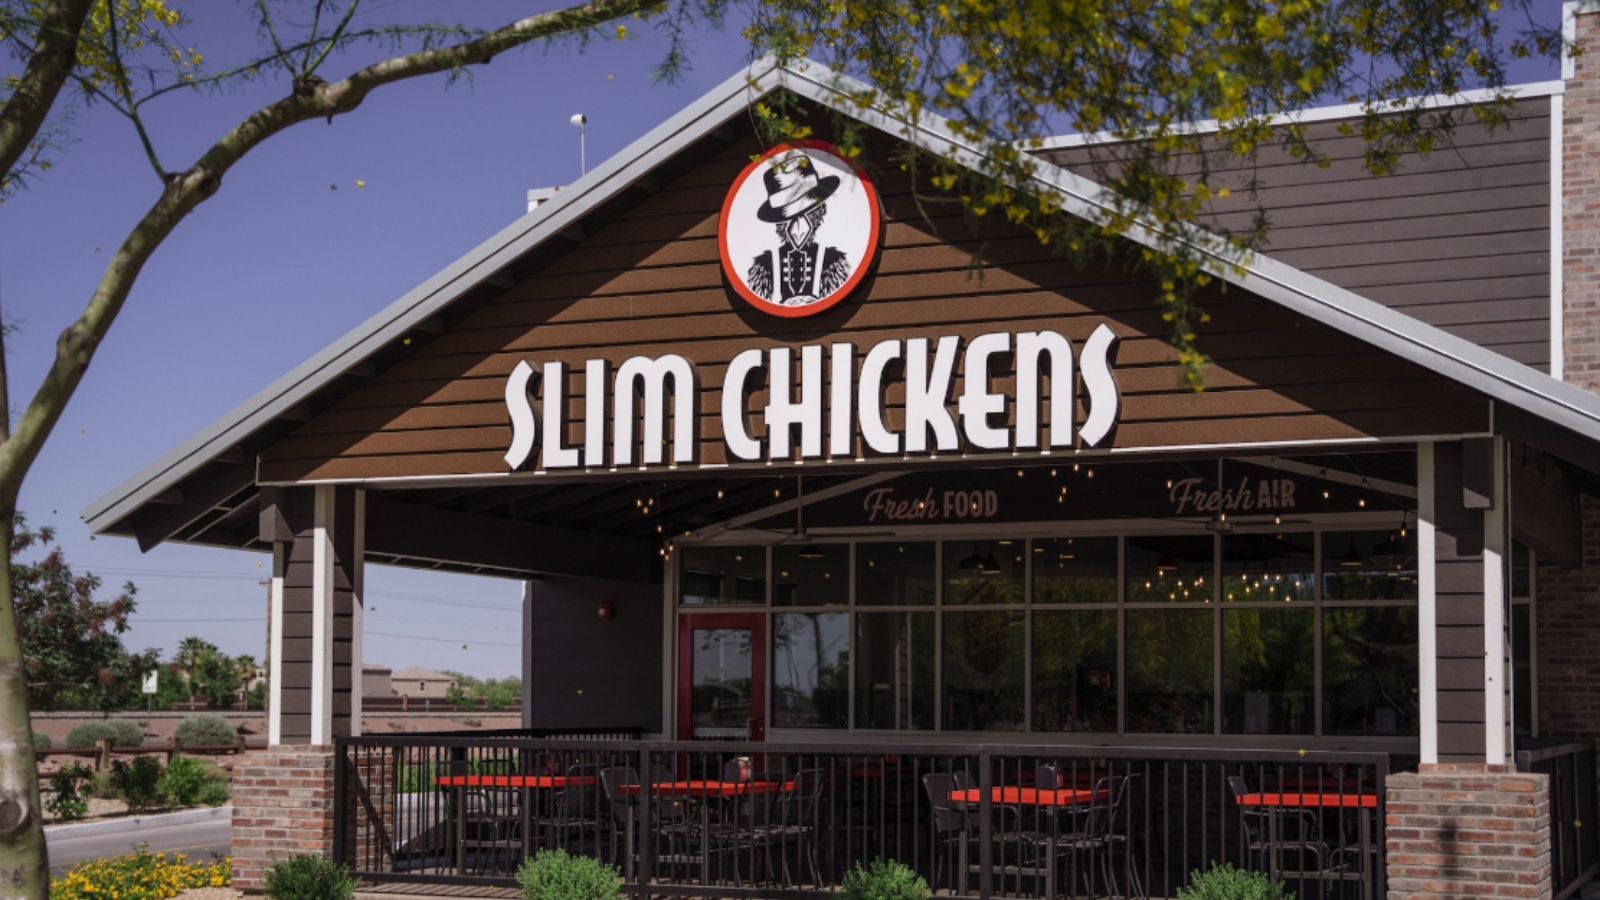 Slim Chickens franchise hiring for 3 new restaurants in Arizona...